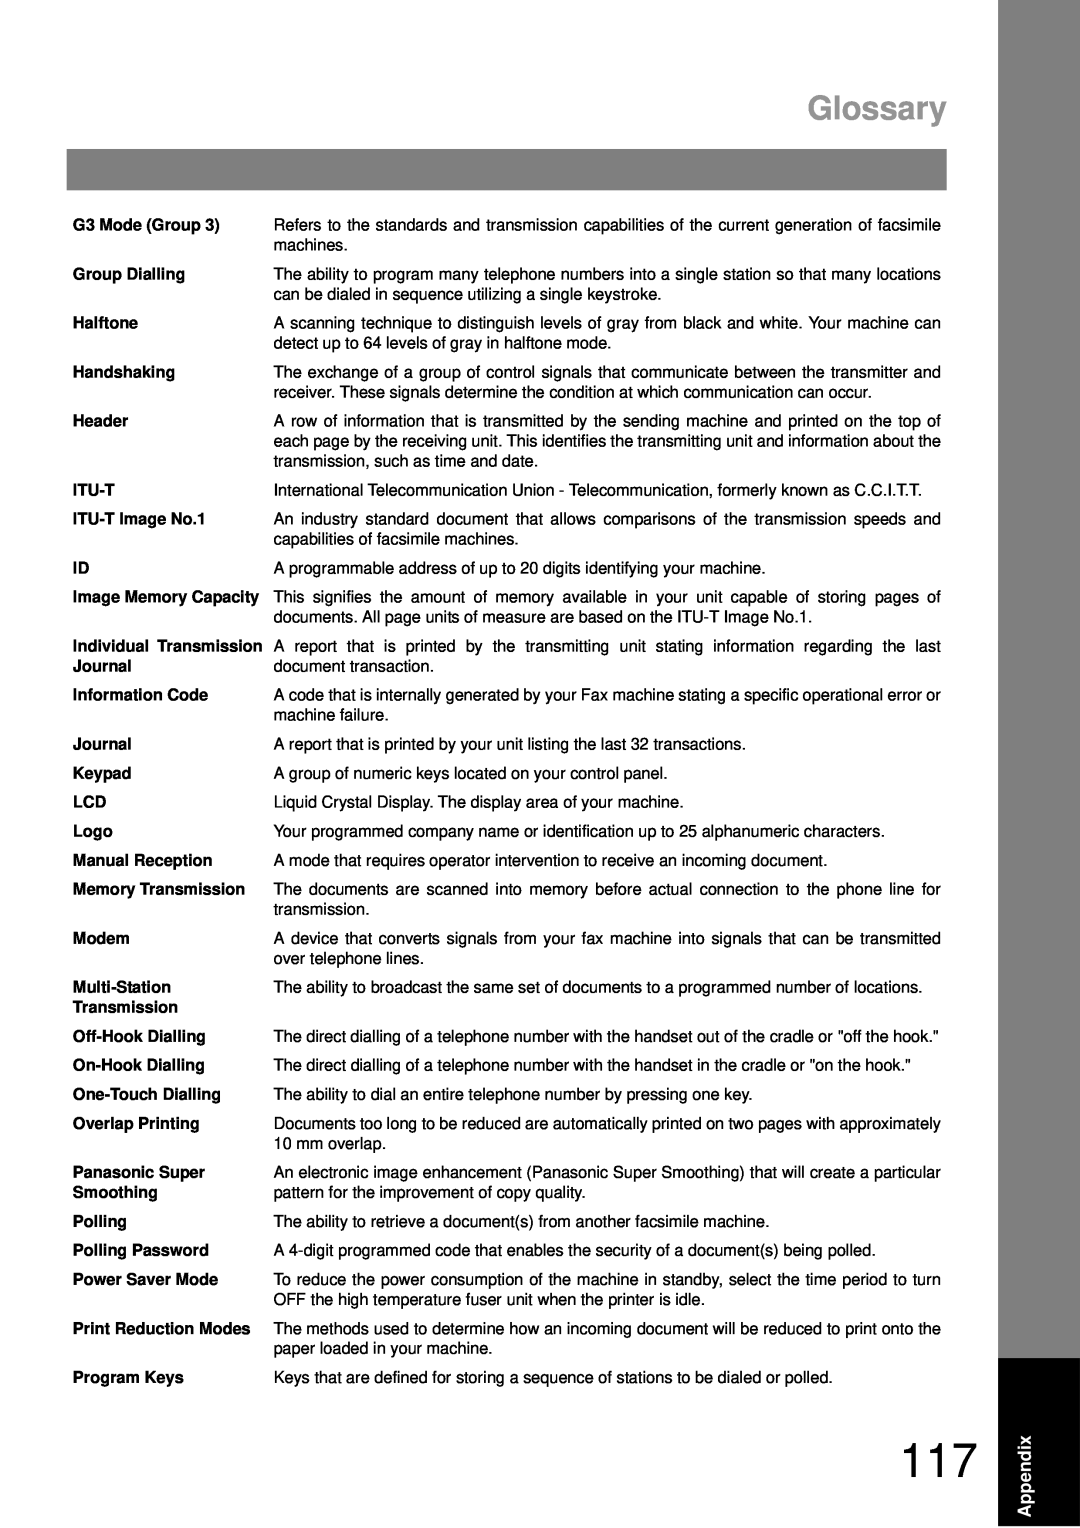 Castelle UF-490 appendix Glossary 